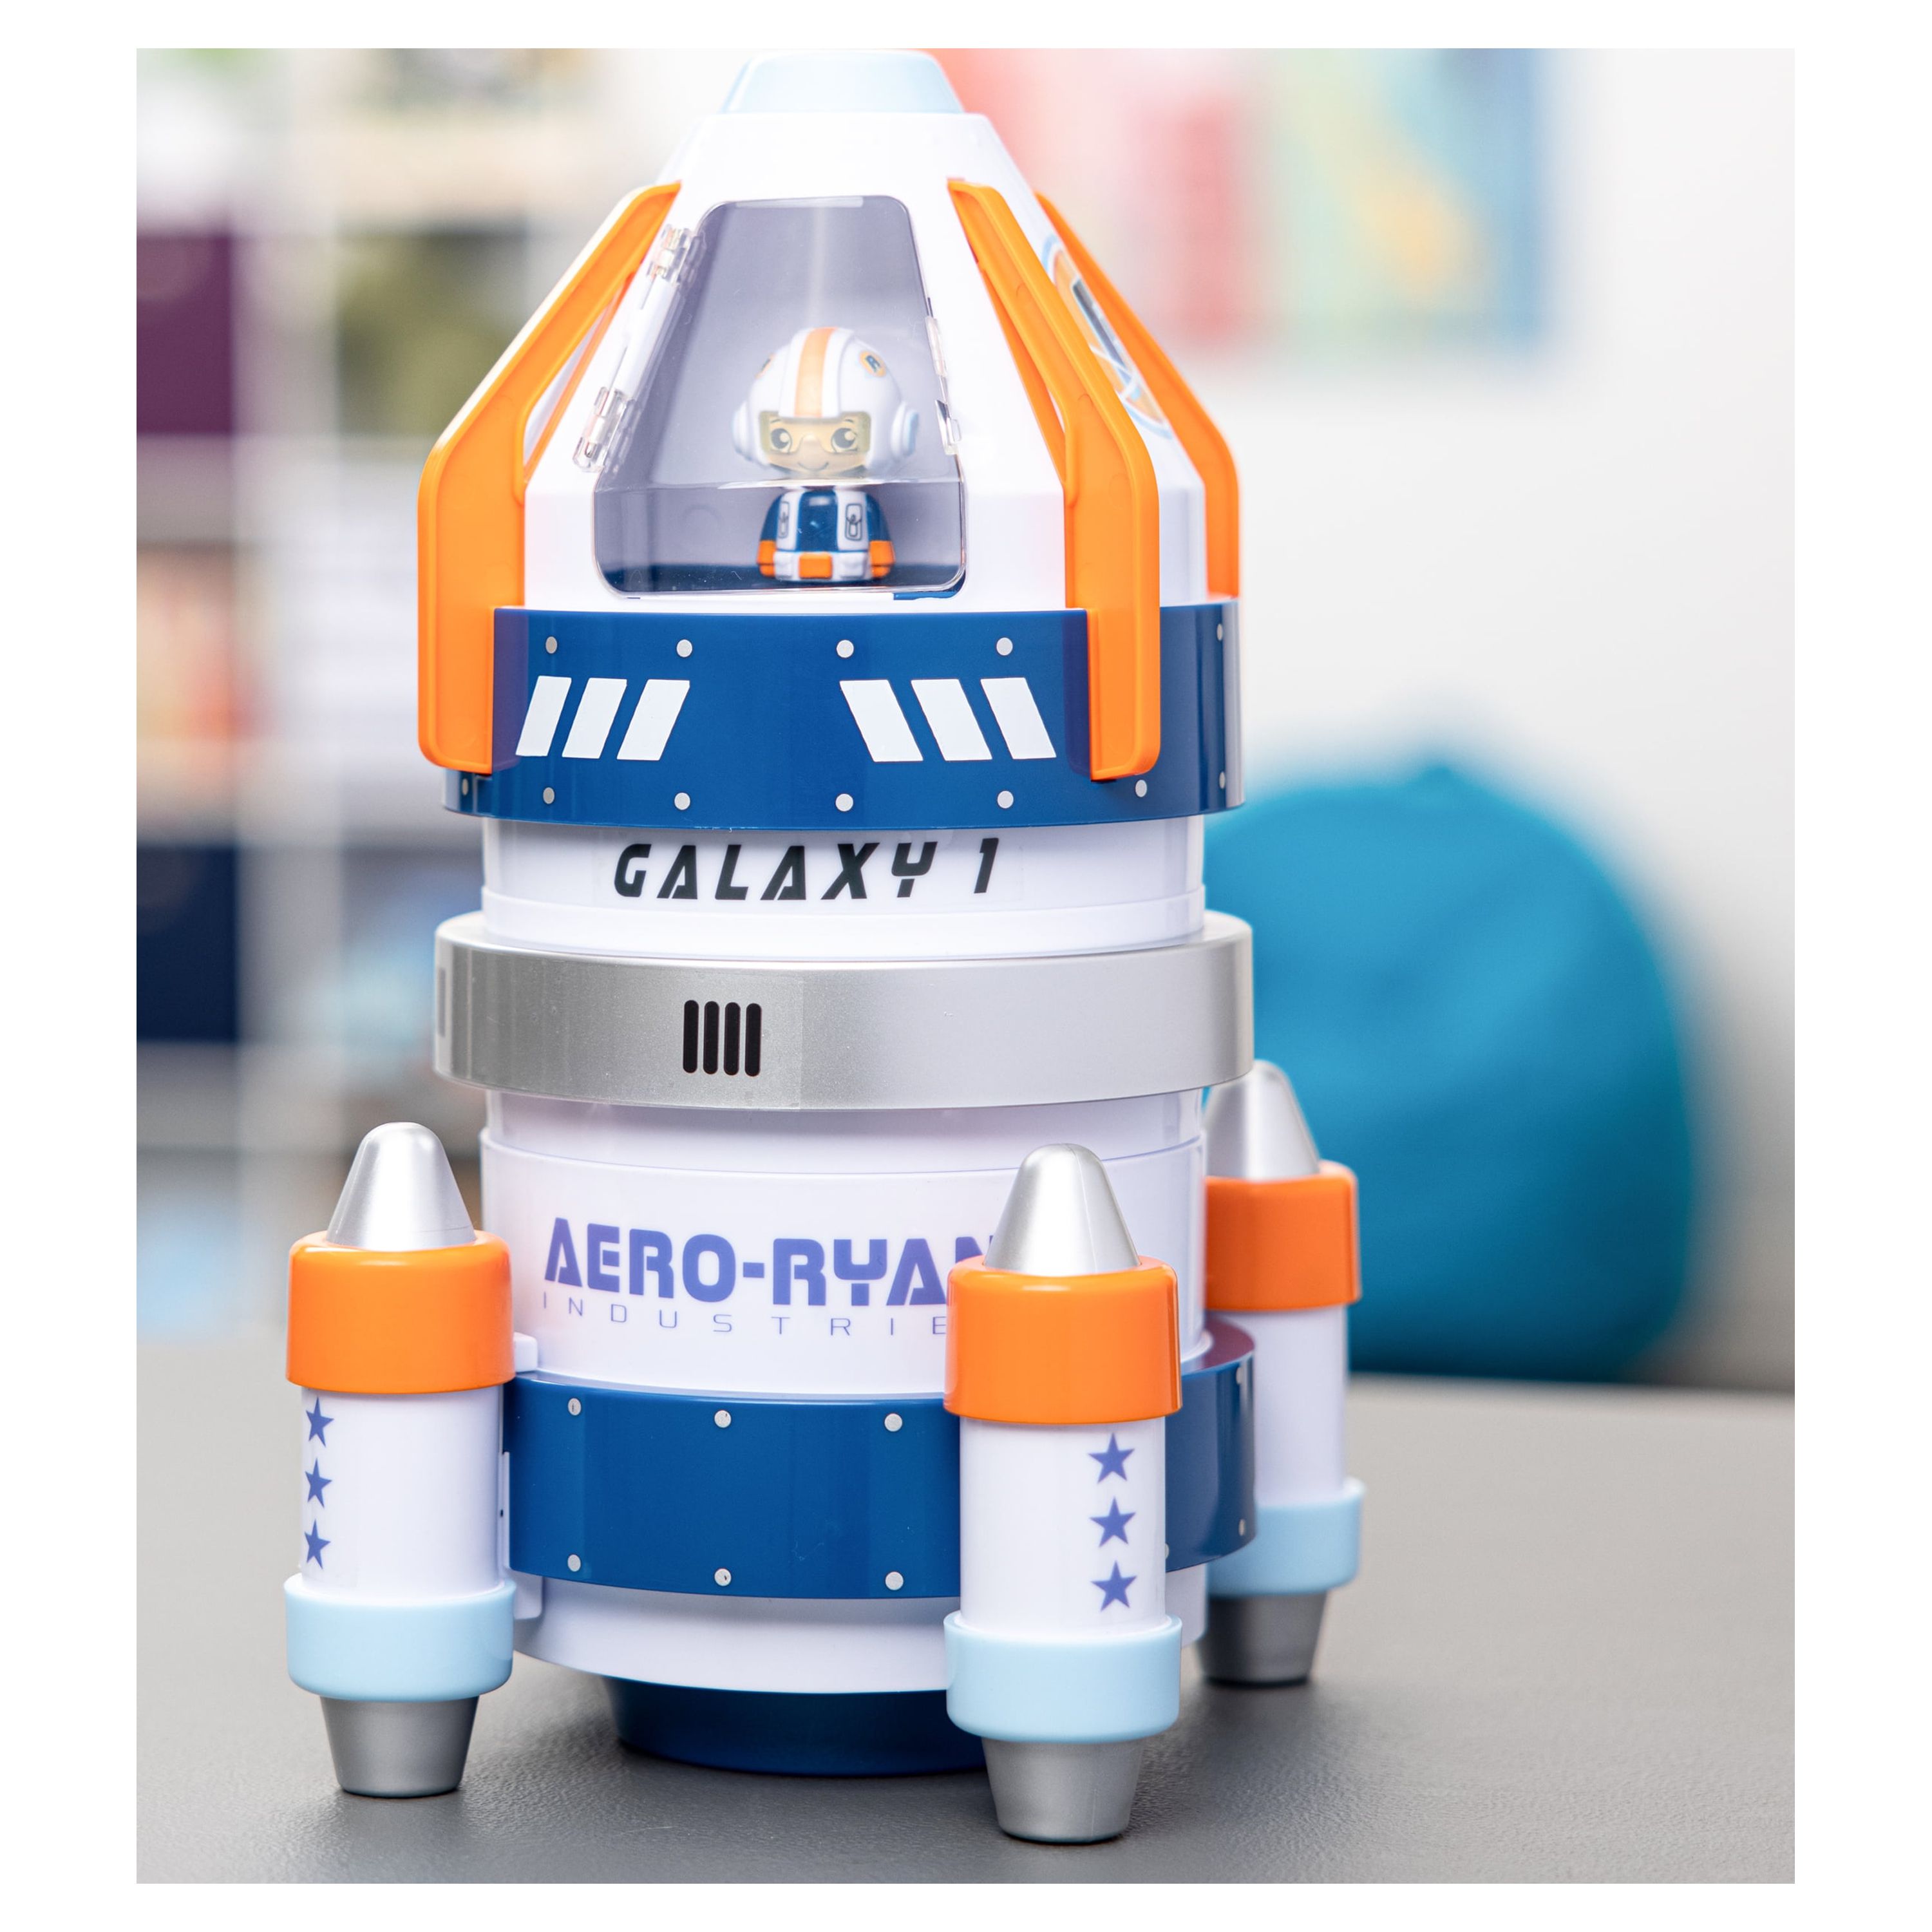 Ryan's World Galaxy Explorer Rocket 12 Pack Micro Figure Playset Toy - image 9 of 9